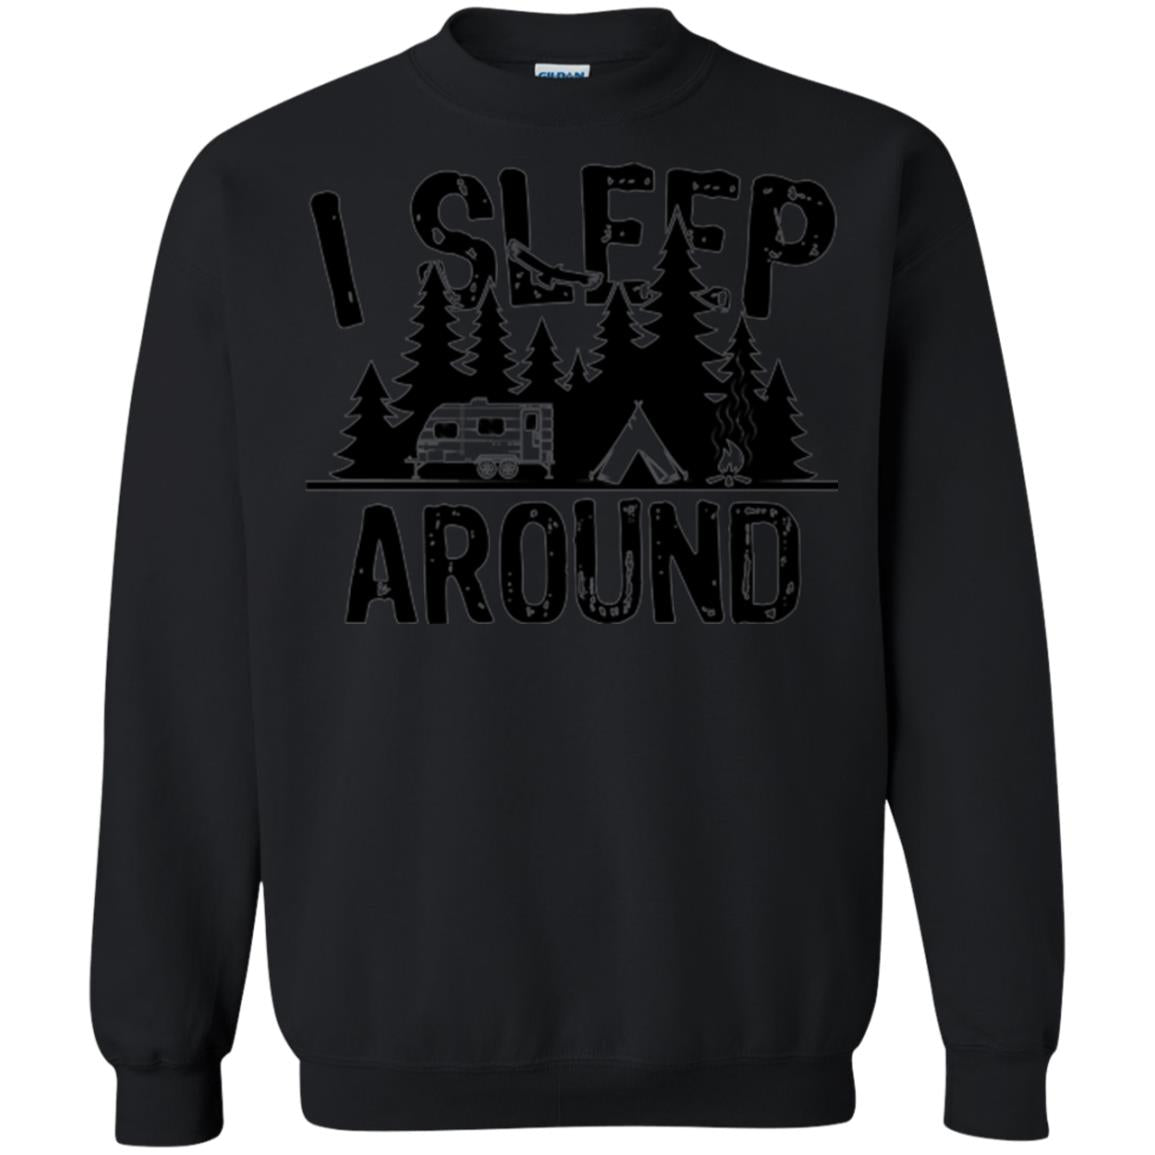 Funny Camping T-shirt I Sleep Around